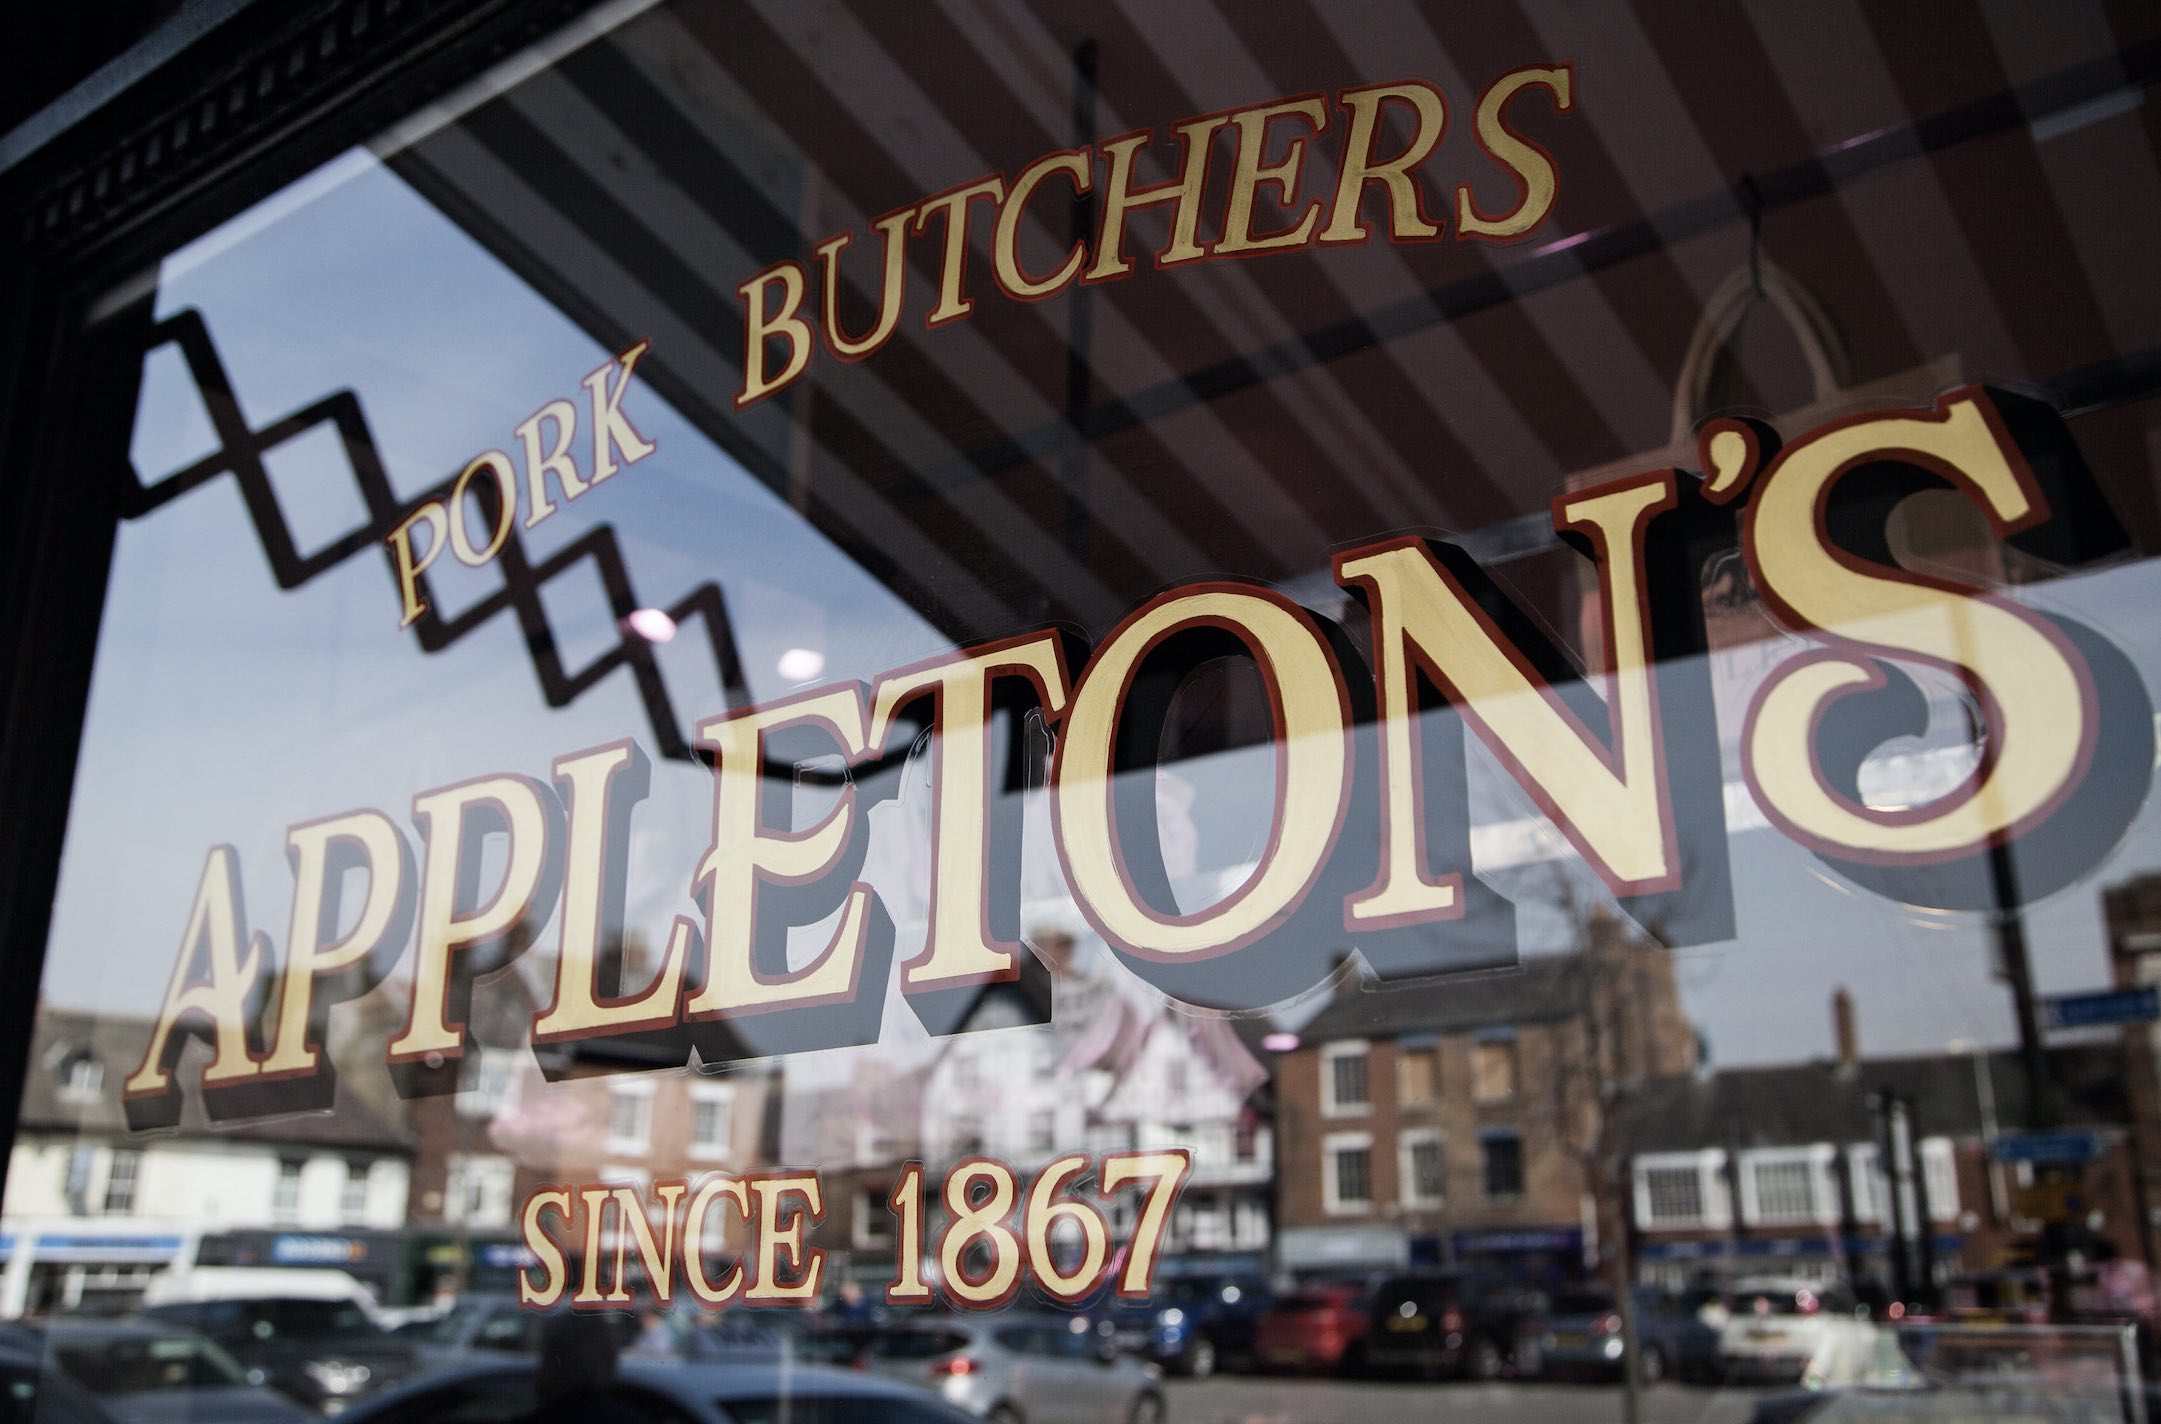 Shop front window of Appleton's Butchers